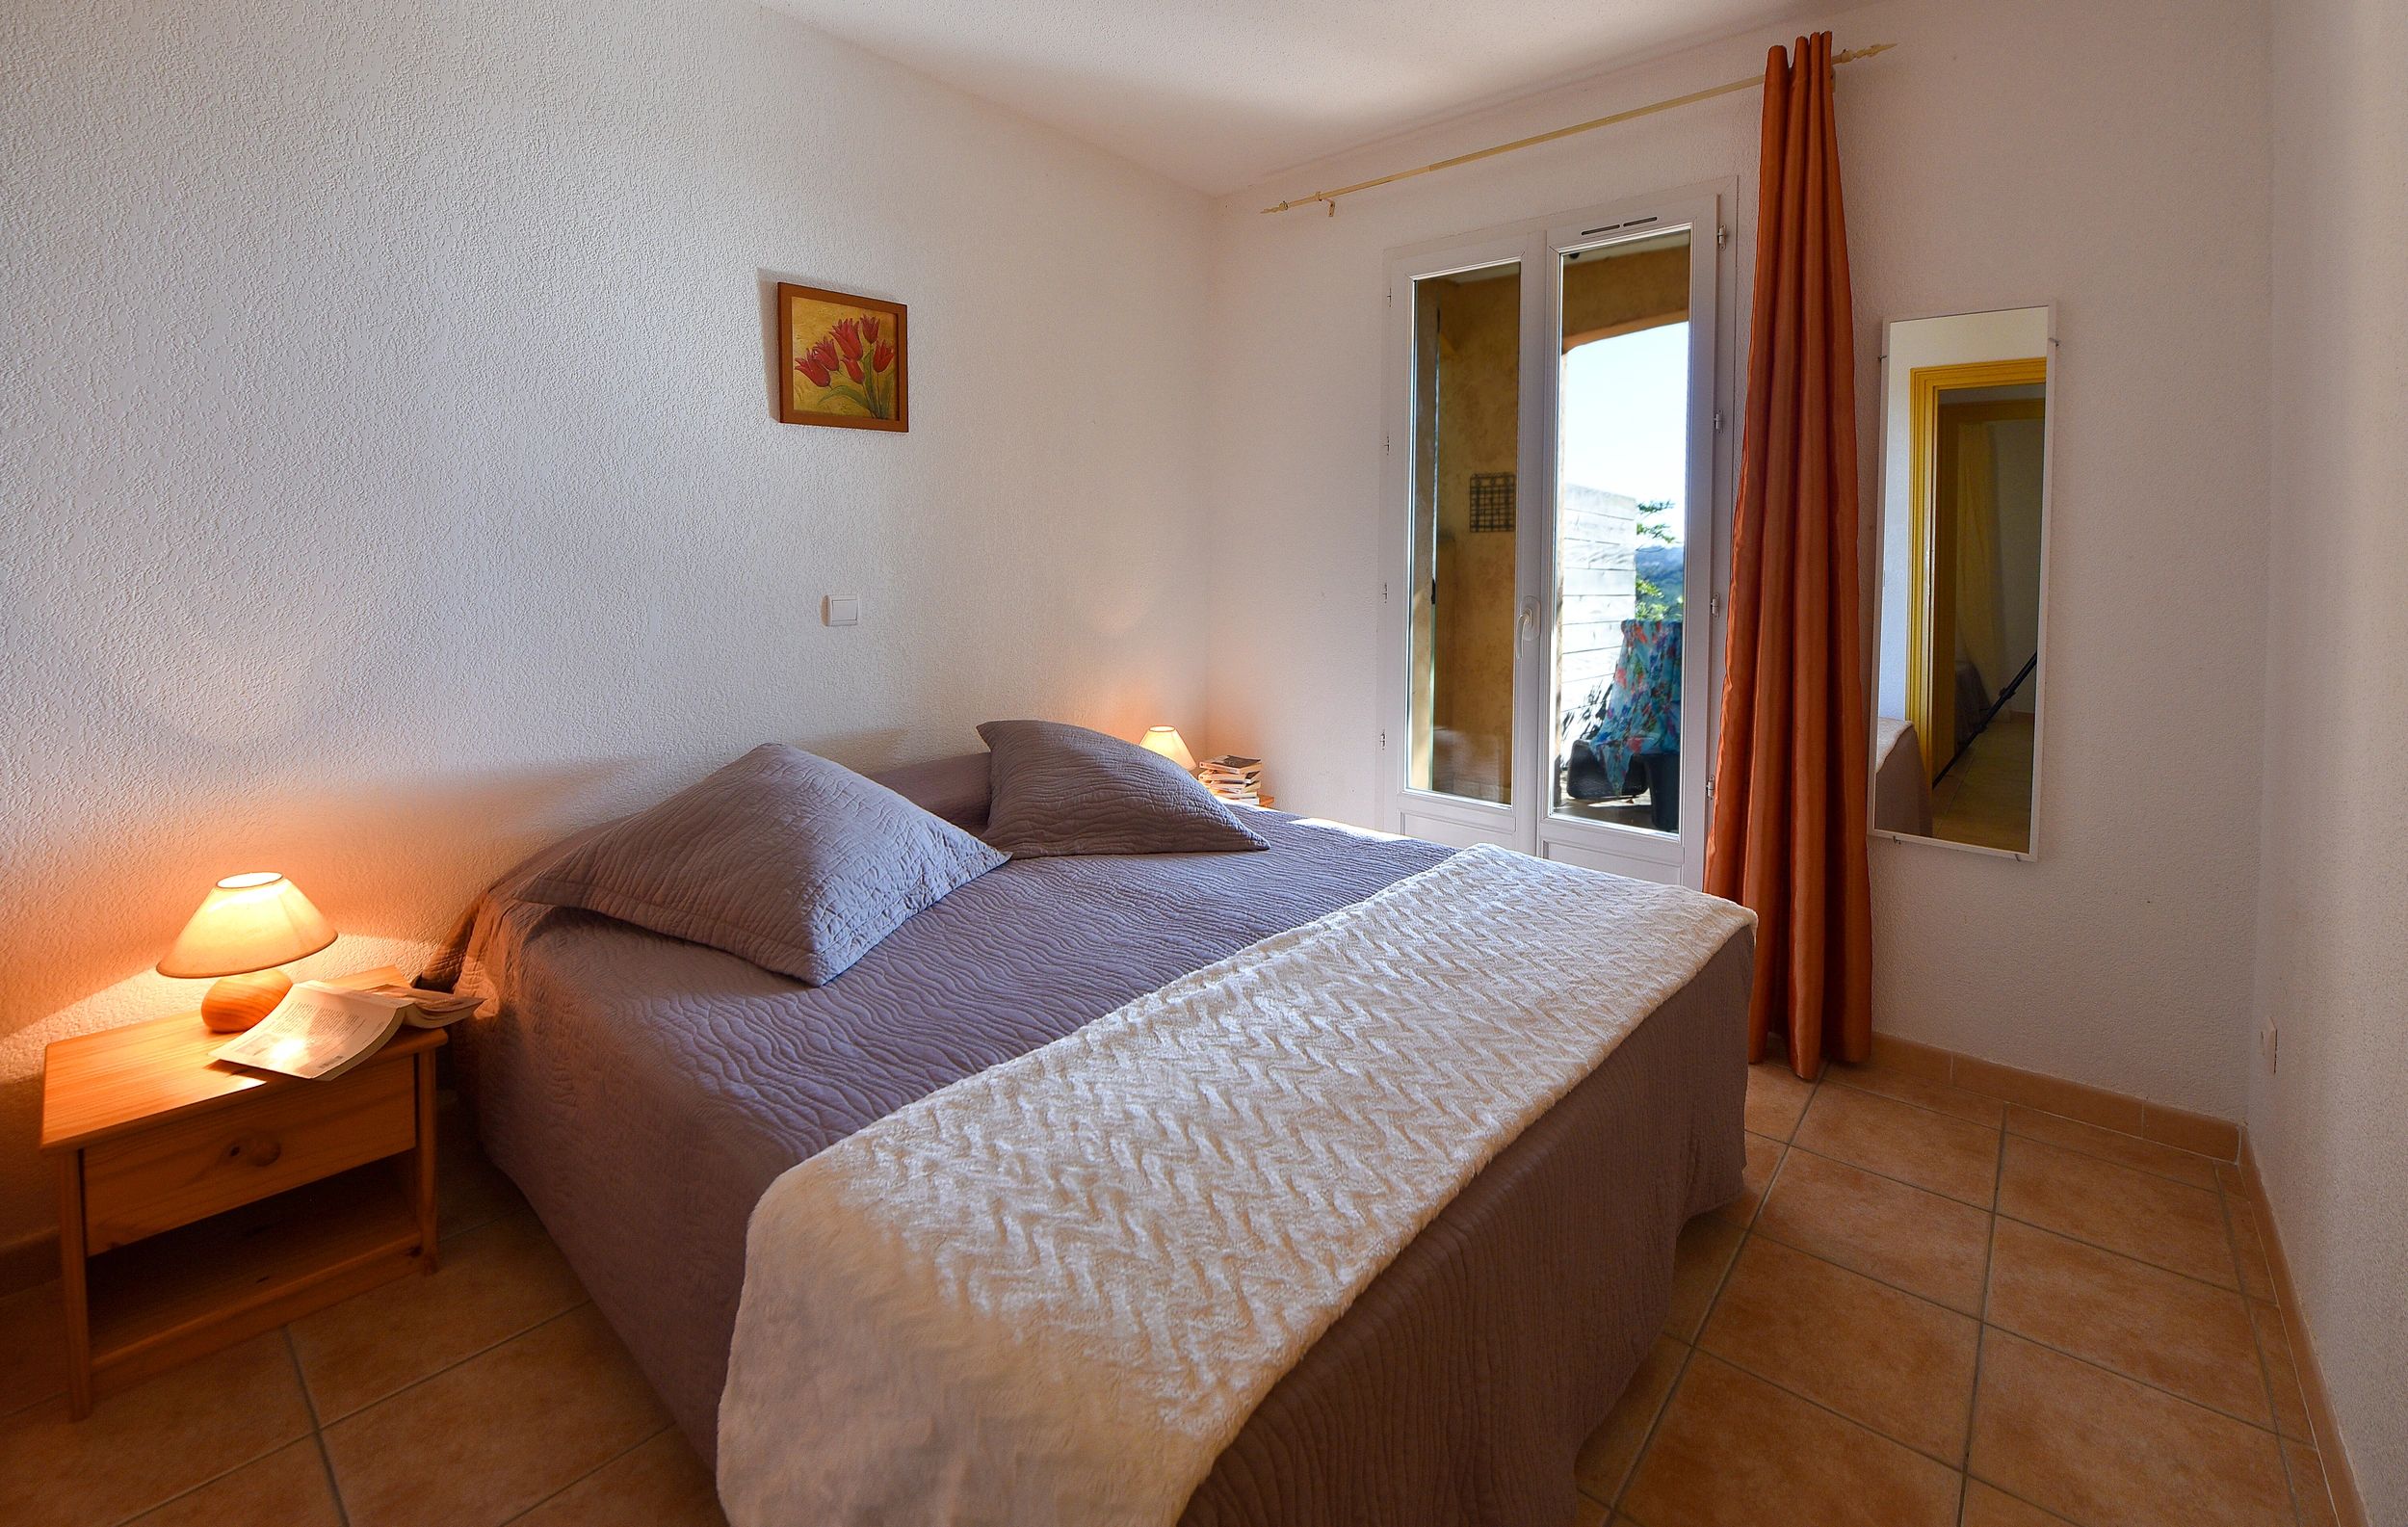 Luxury villa with spacious bedroom in Porto-Vecchio